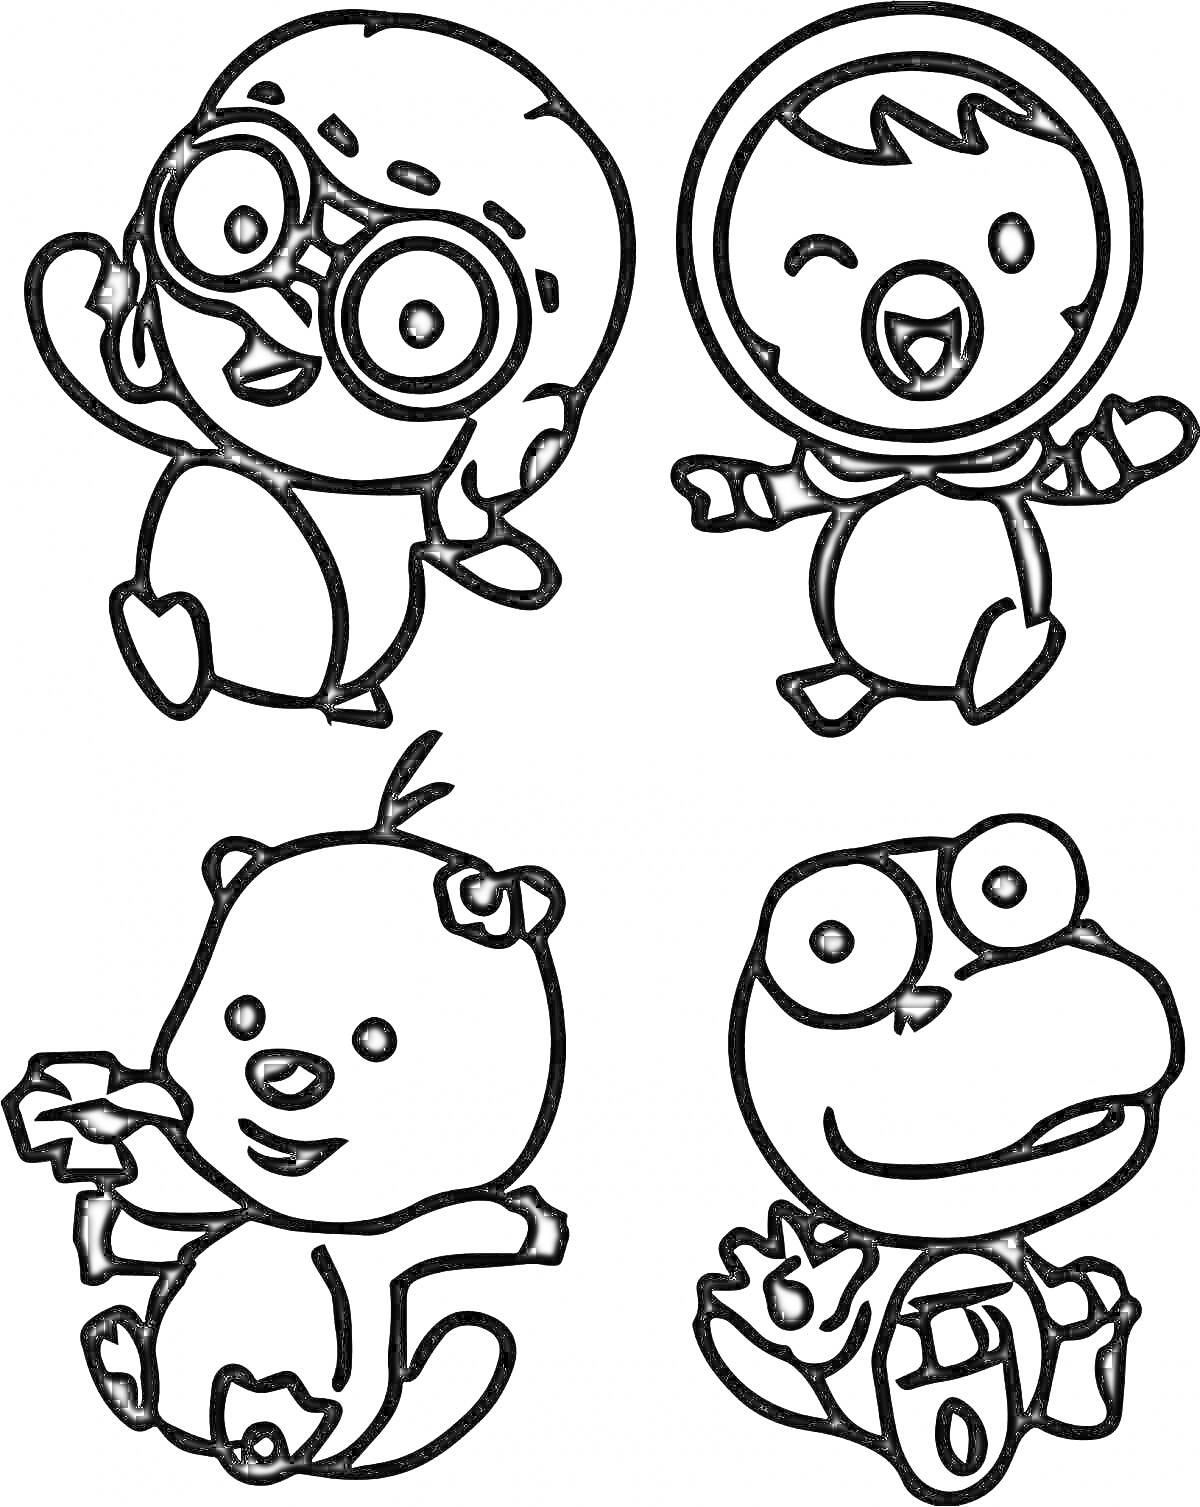 Раскраска Раскраска с персонажами мультфильма: Дуда и Дада - Дуда в очках, Дуда в шлеме, медвежонок, зеленый лягушонок.